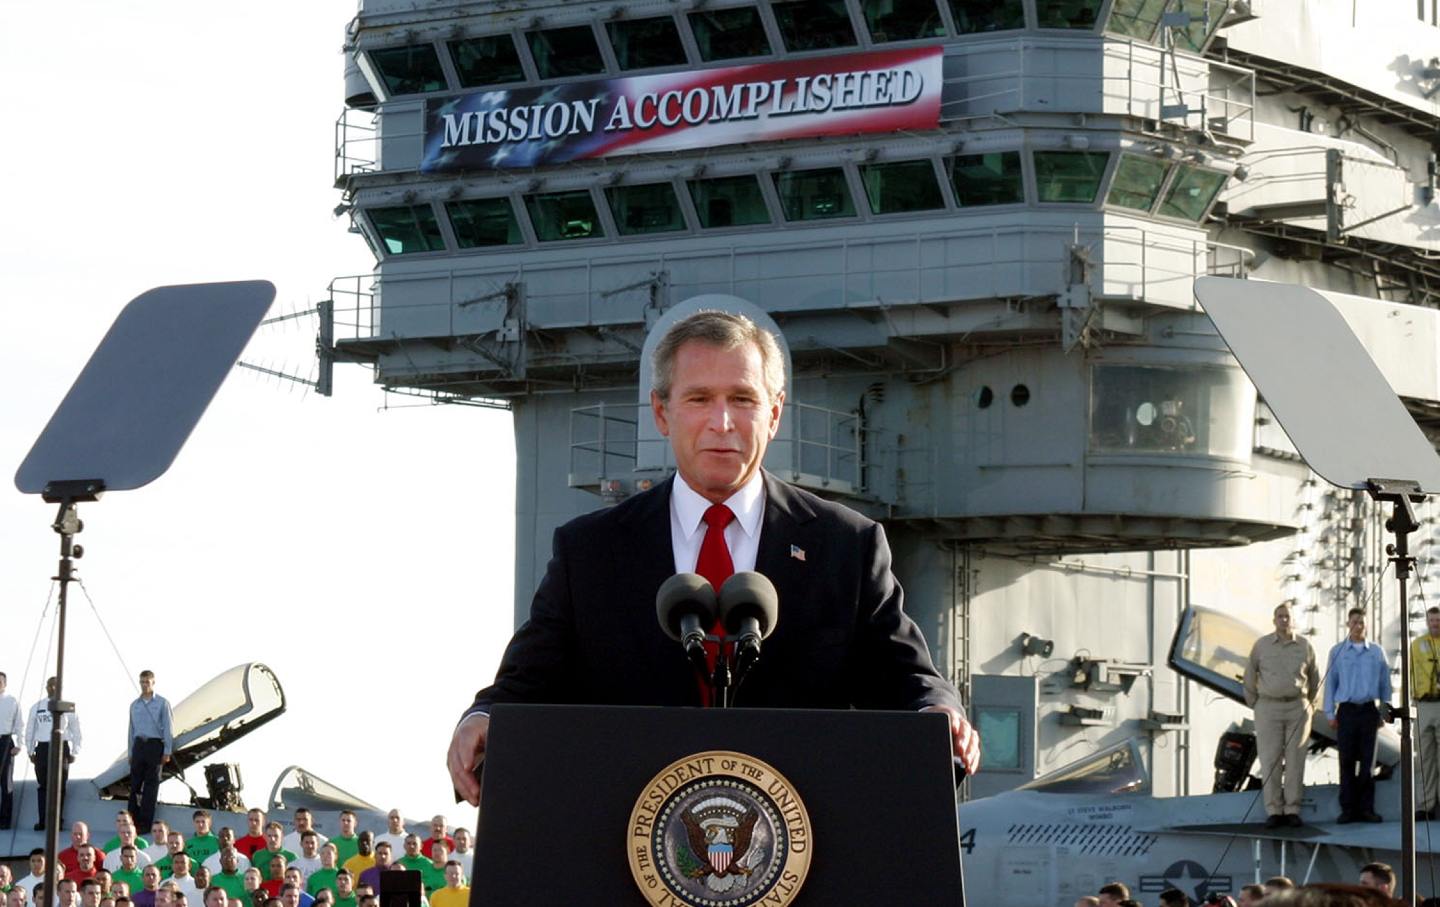 Banner „George Bush Mission erfüllt“.